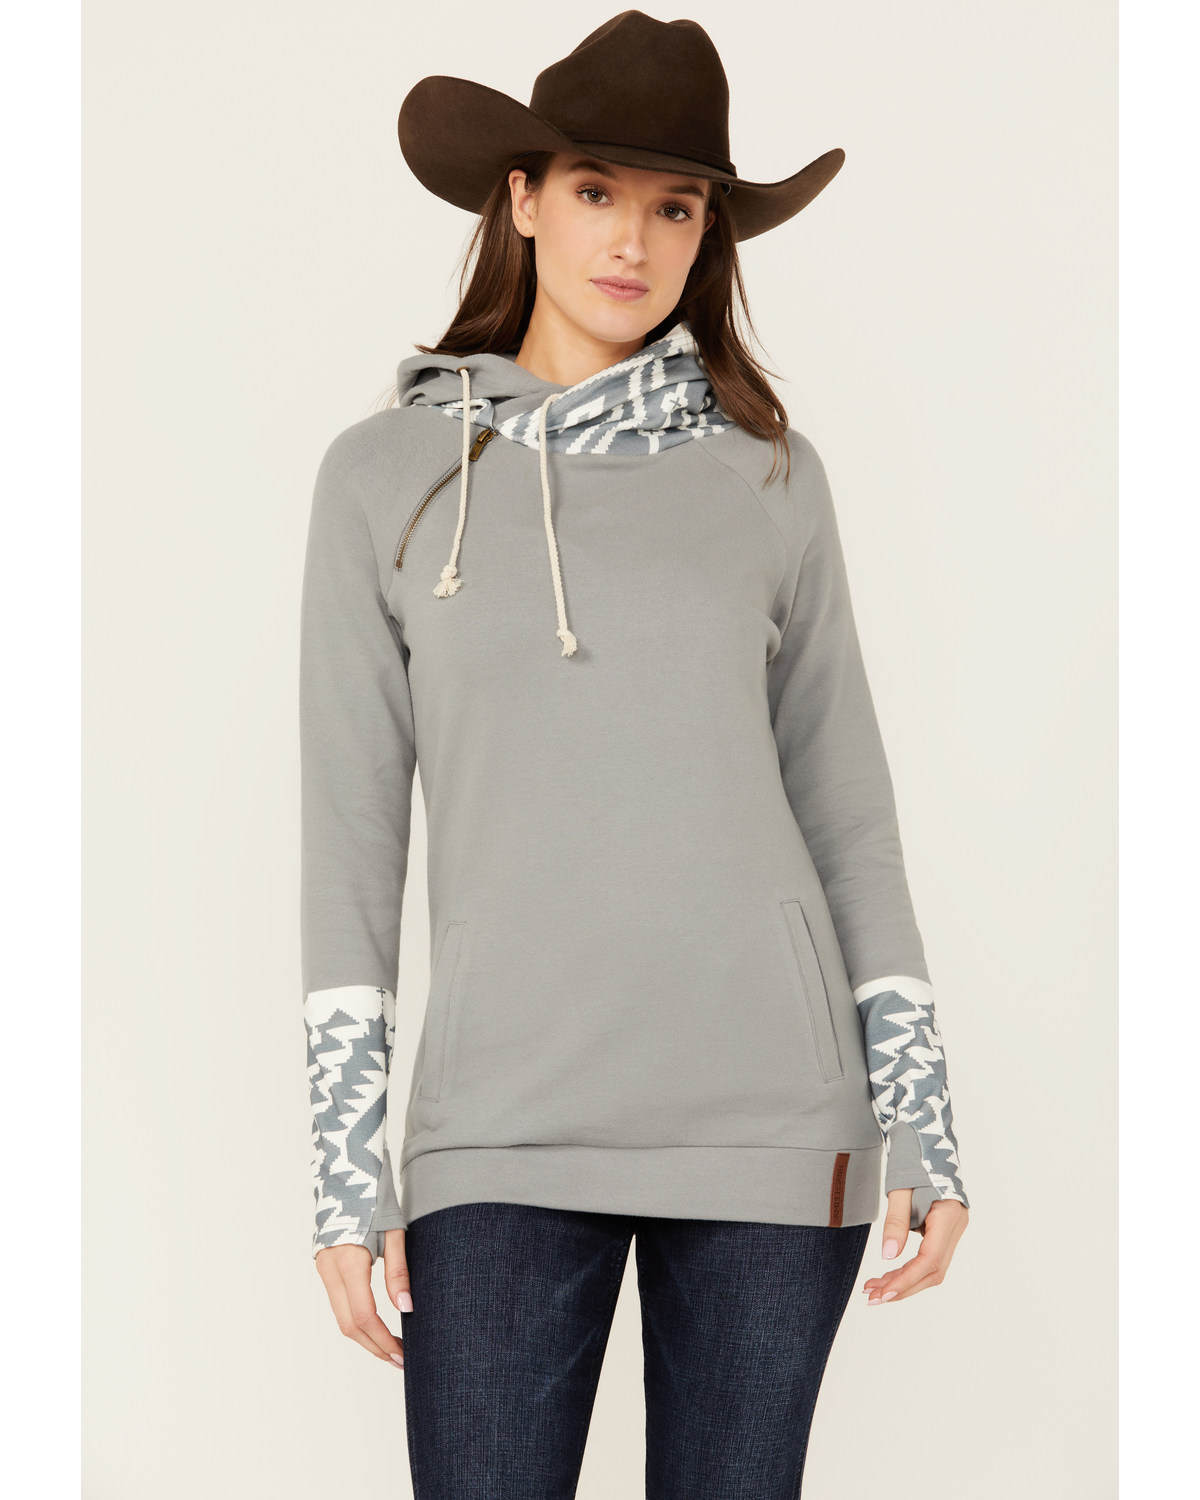 Ampersand Avenue Women's Southwestern Print Hooded Pullover